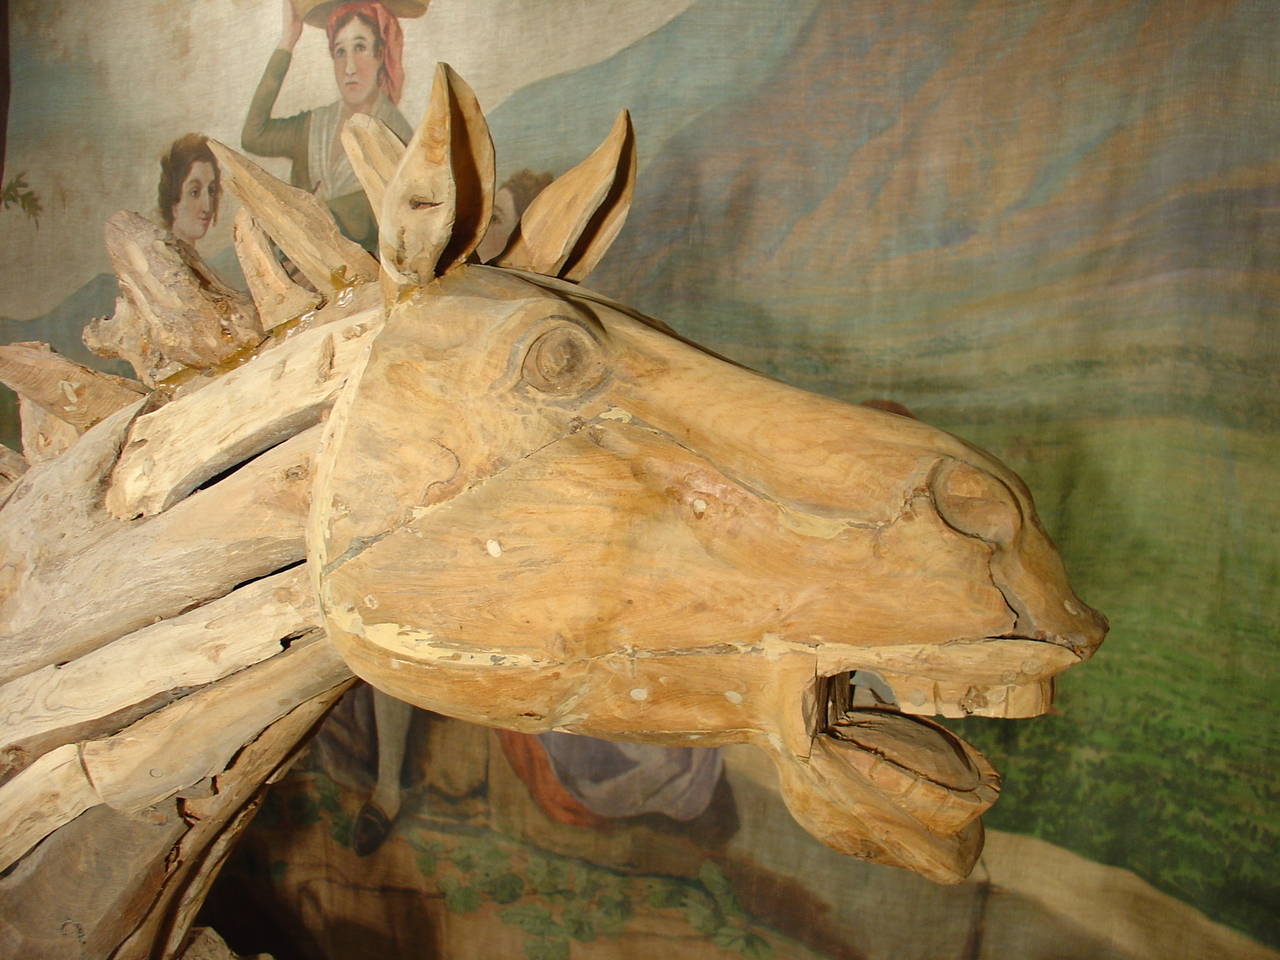 Driftwood Horse Head Sculpture from France 1